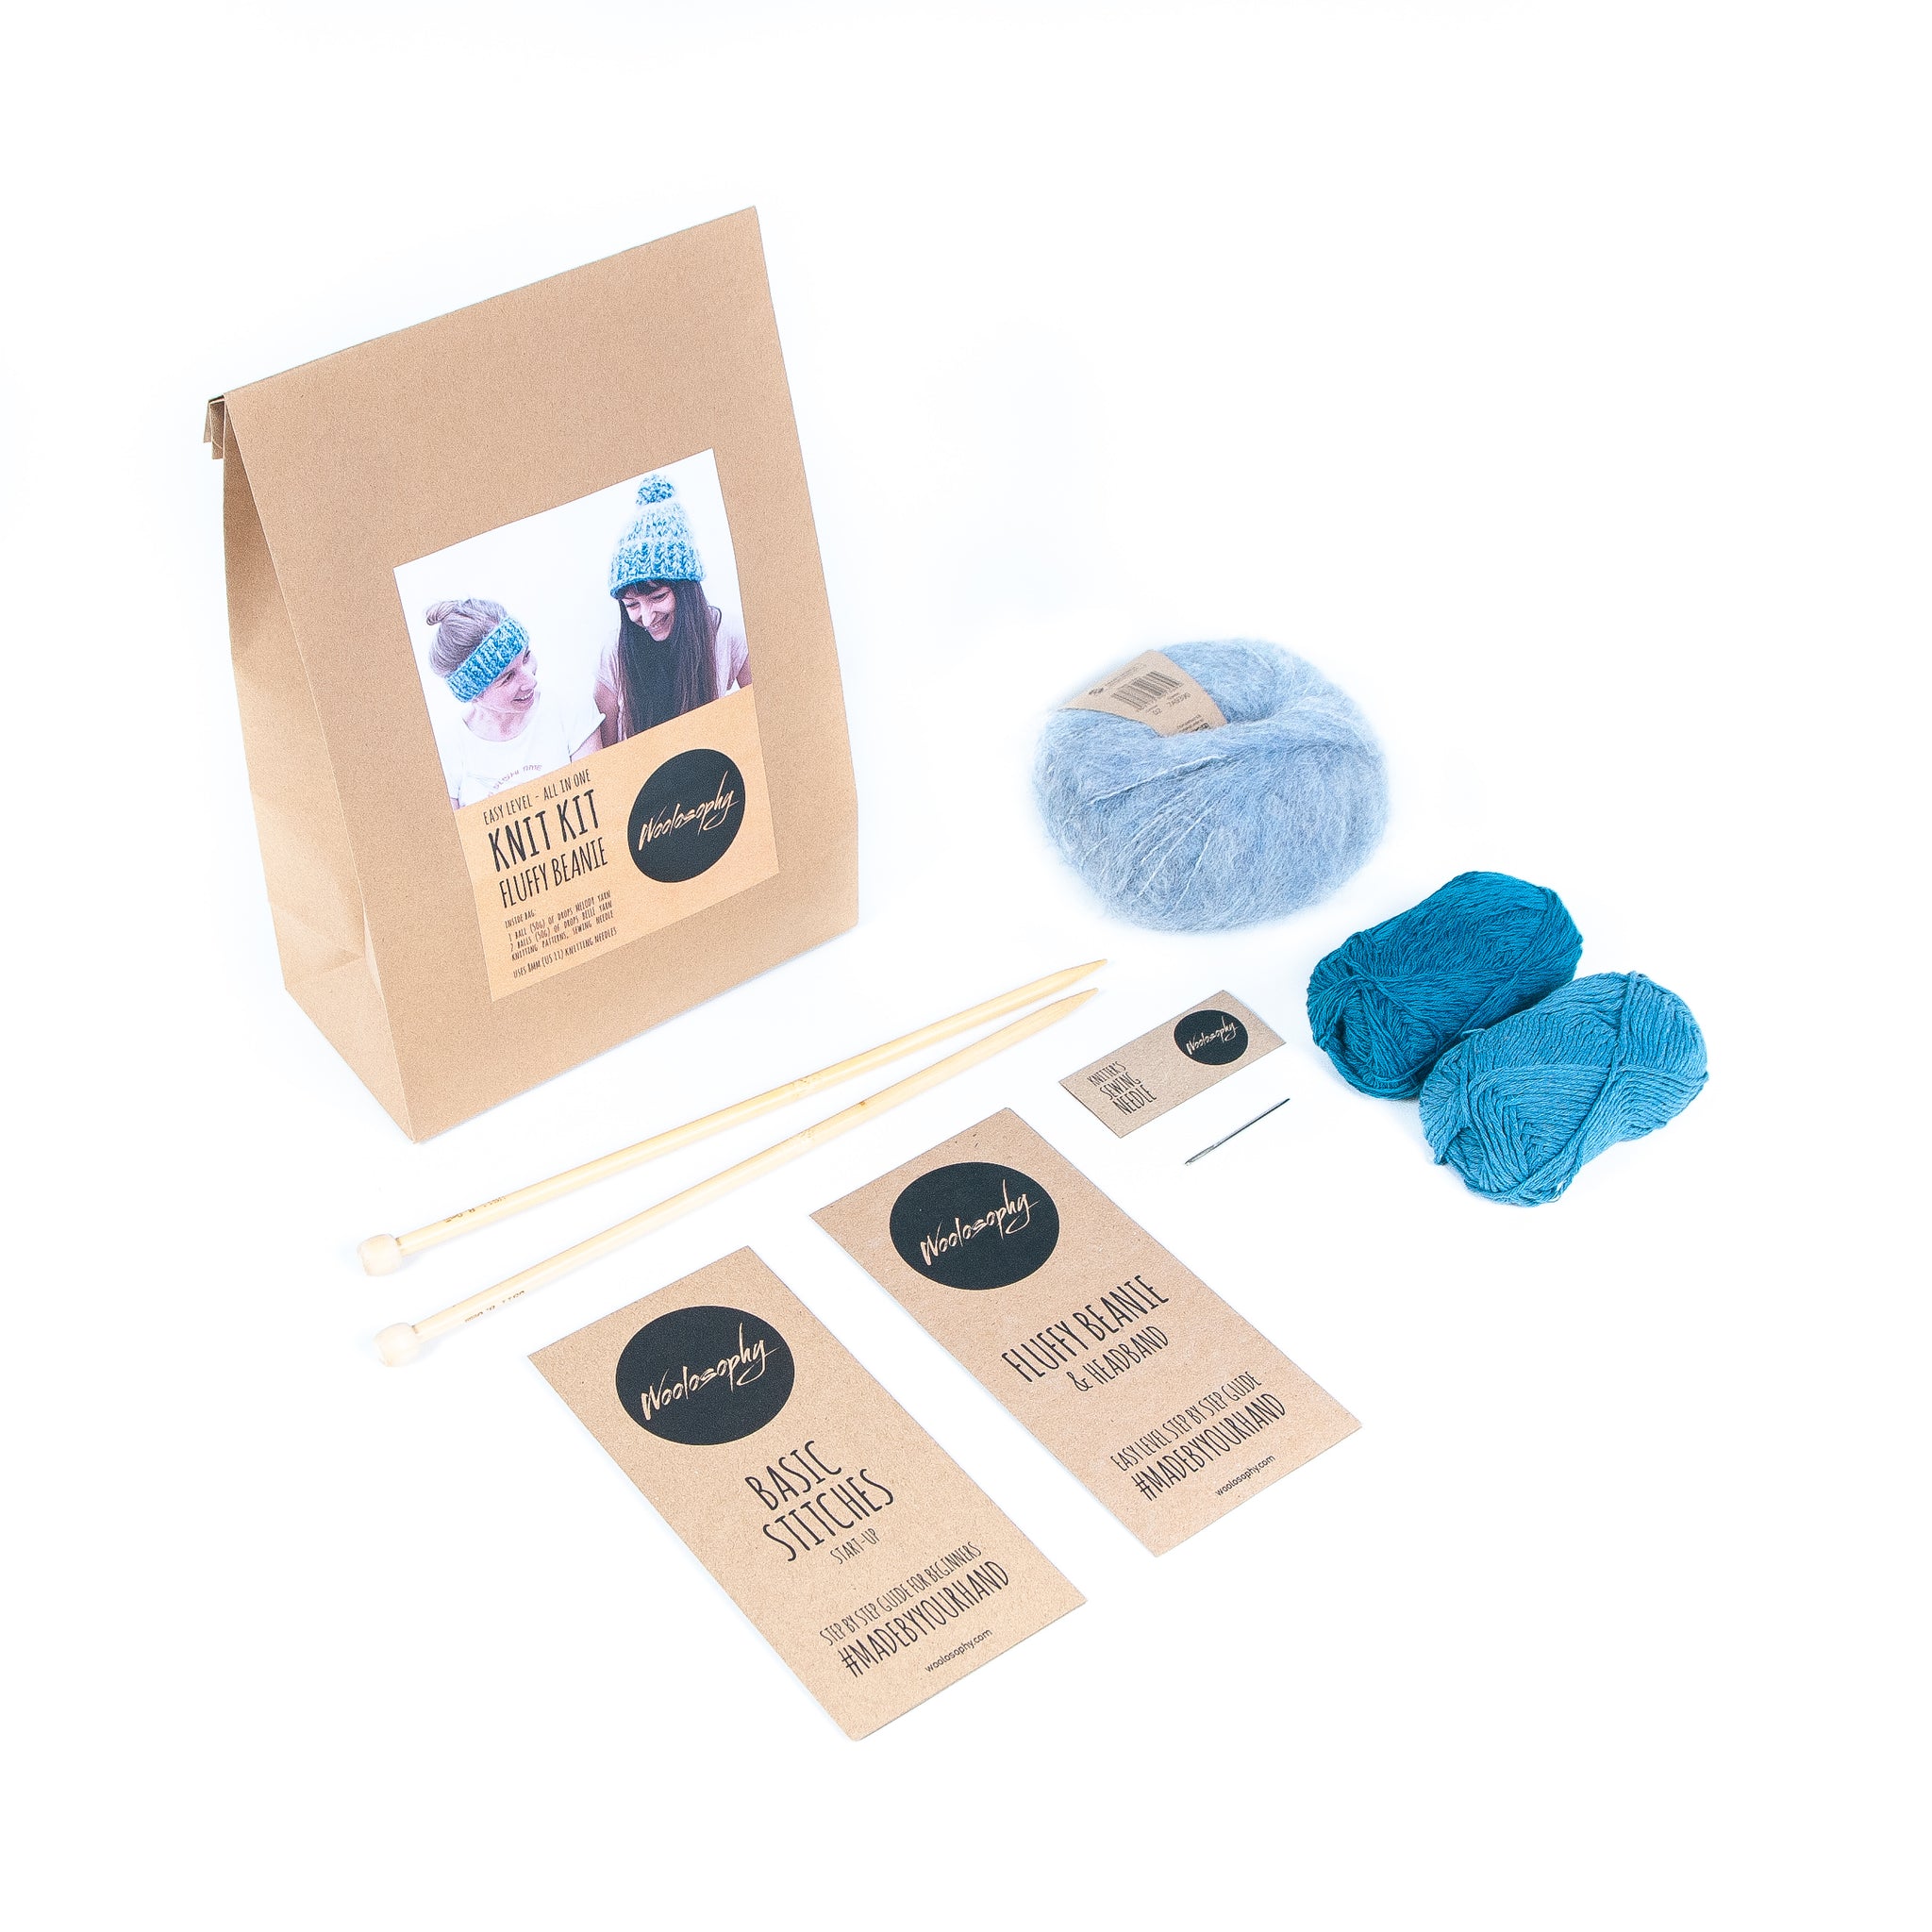 Headband Knit kit